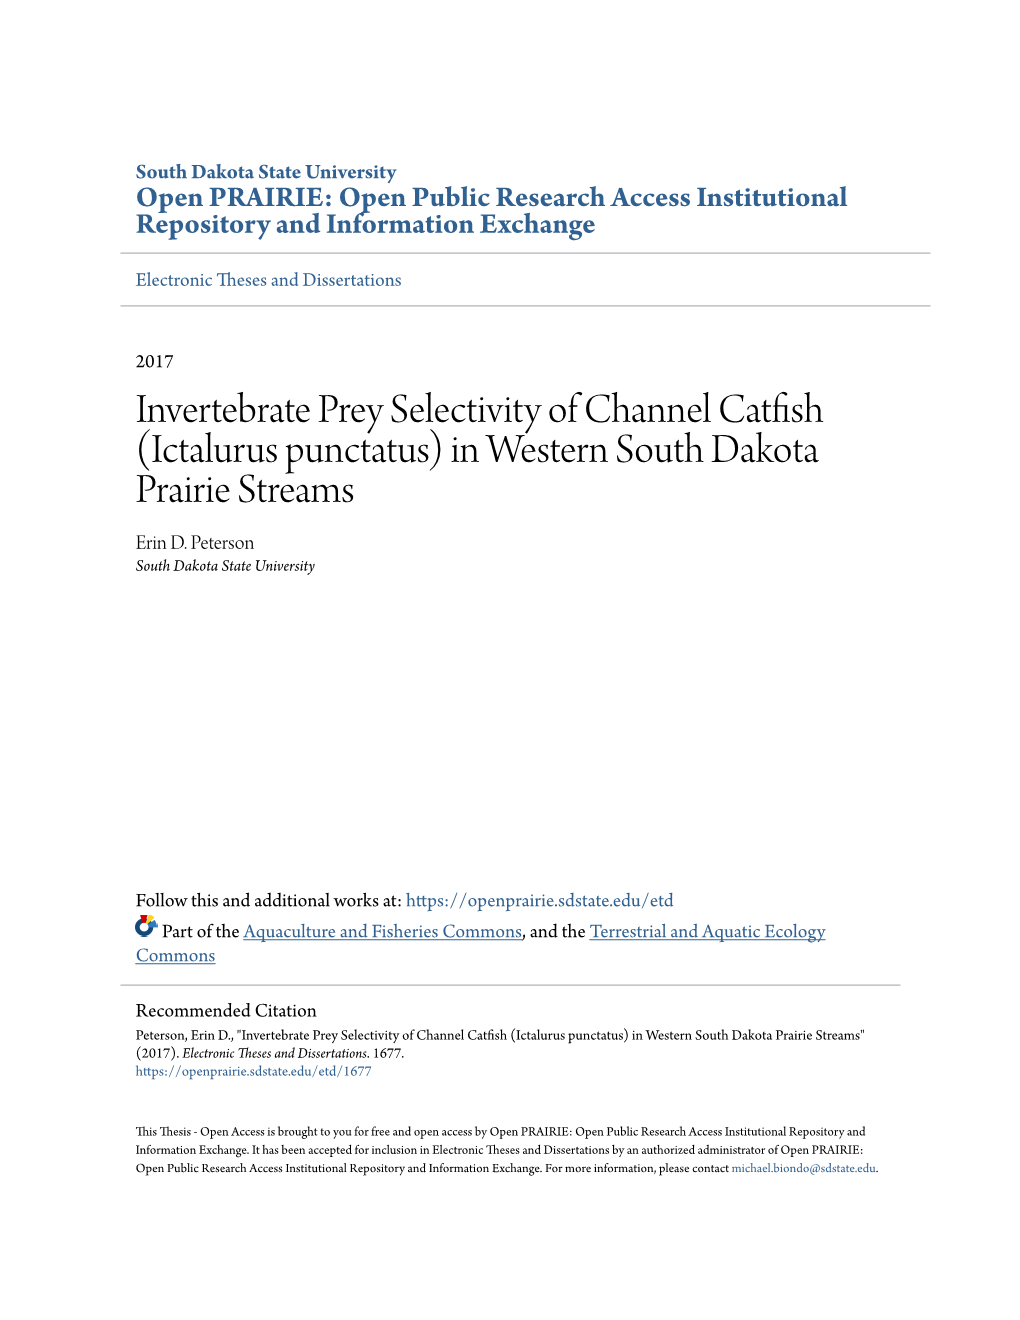 Invertebrate Prey Selectivity of Channel Catfish (Ictalurus Punctatus) in Western South Dakota Prairie Streams Erin D